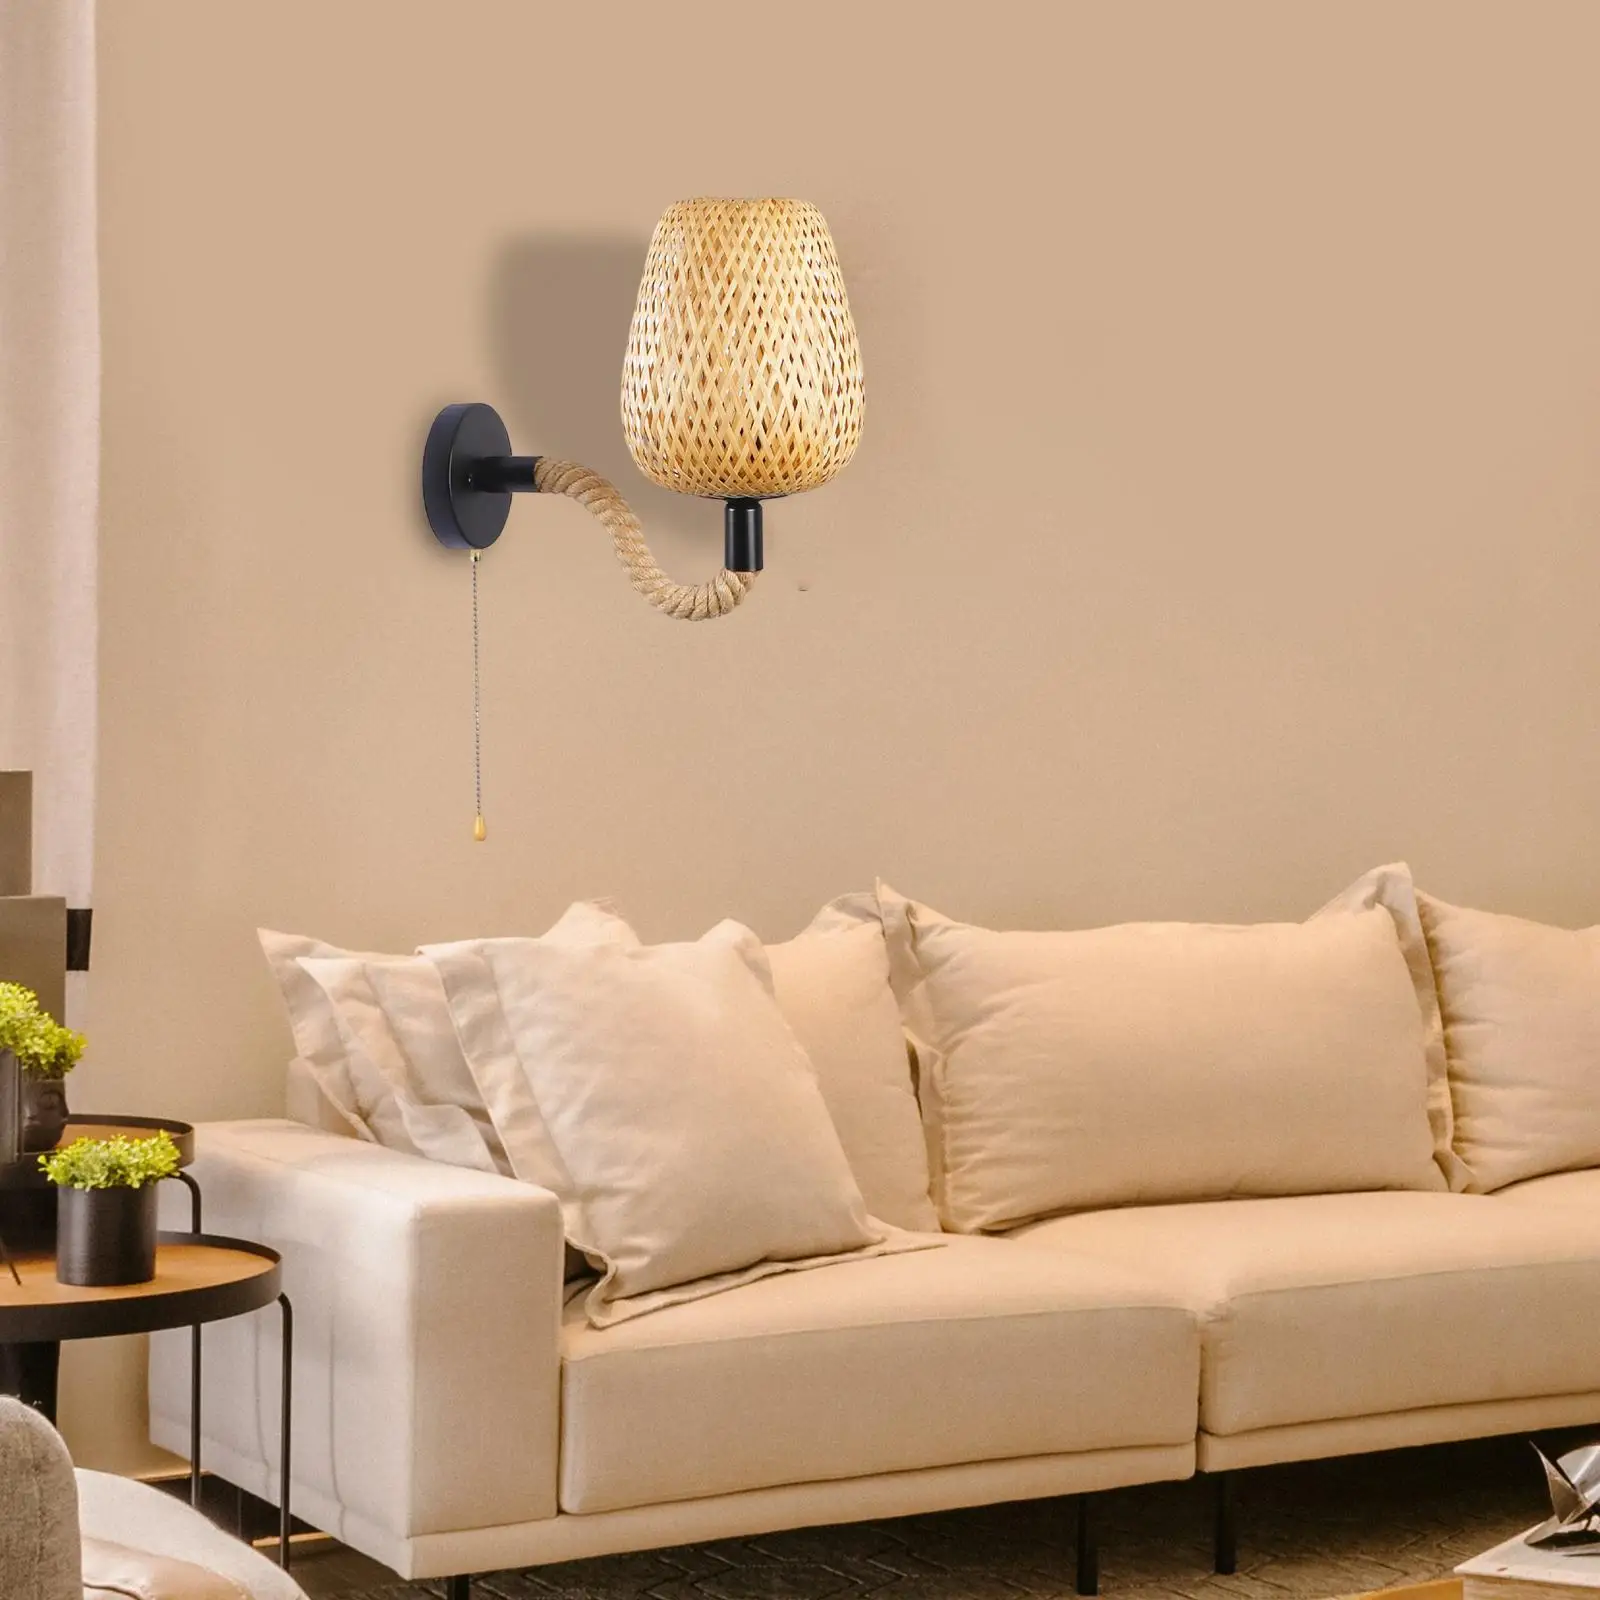 Bamboo Rattan Wall Lamp Art Wall Sconce Lighting for Hallway, Kitchen, Living Room Environmentally Friendly Handmade Rustic